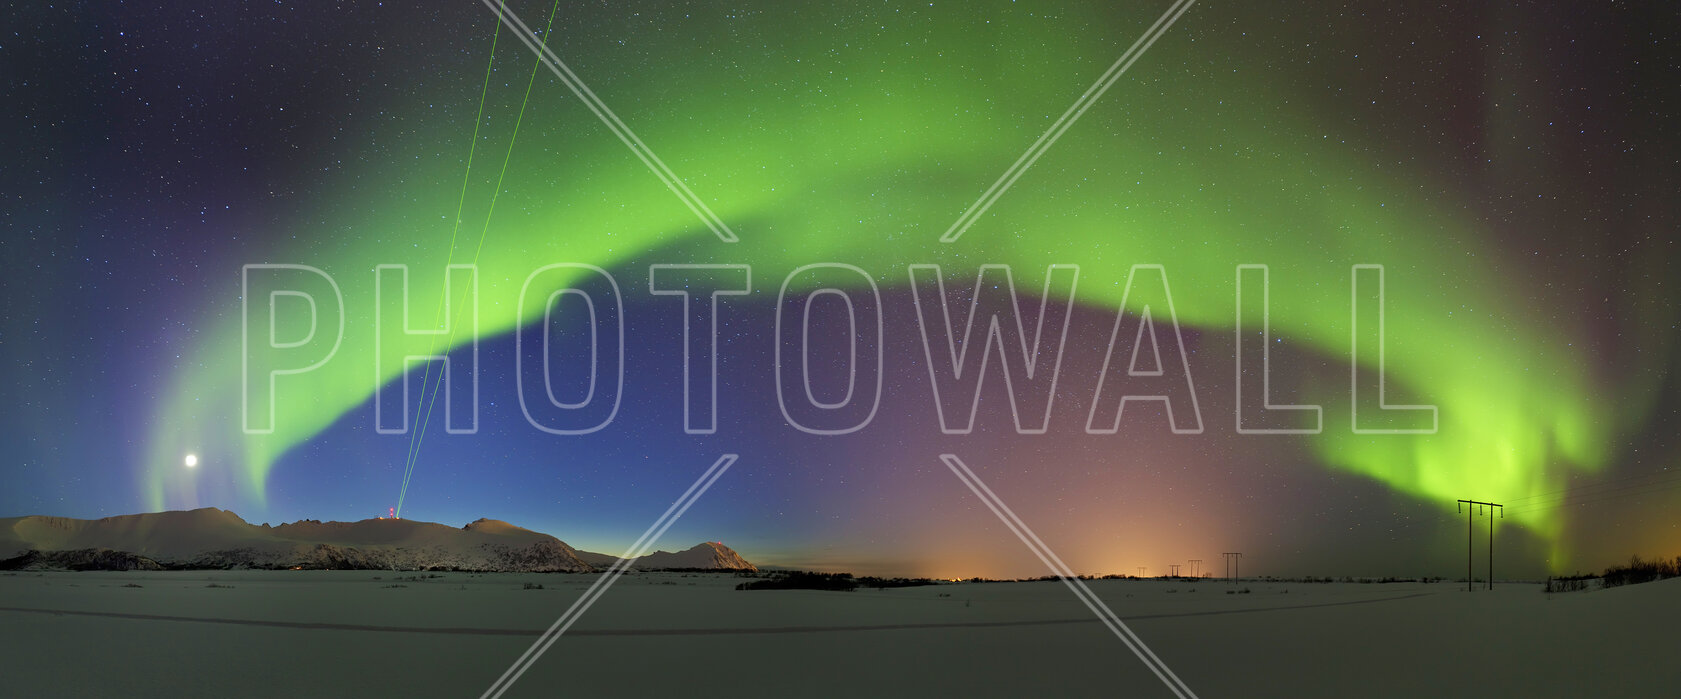 Ananiver at klemme Rådgiver Northern Lights - Populær plakat - Photowall